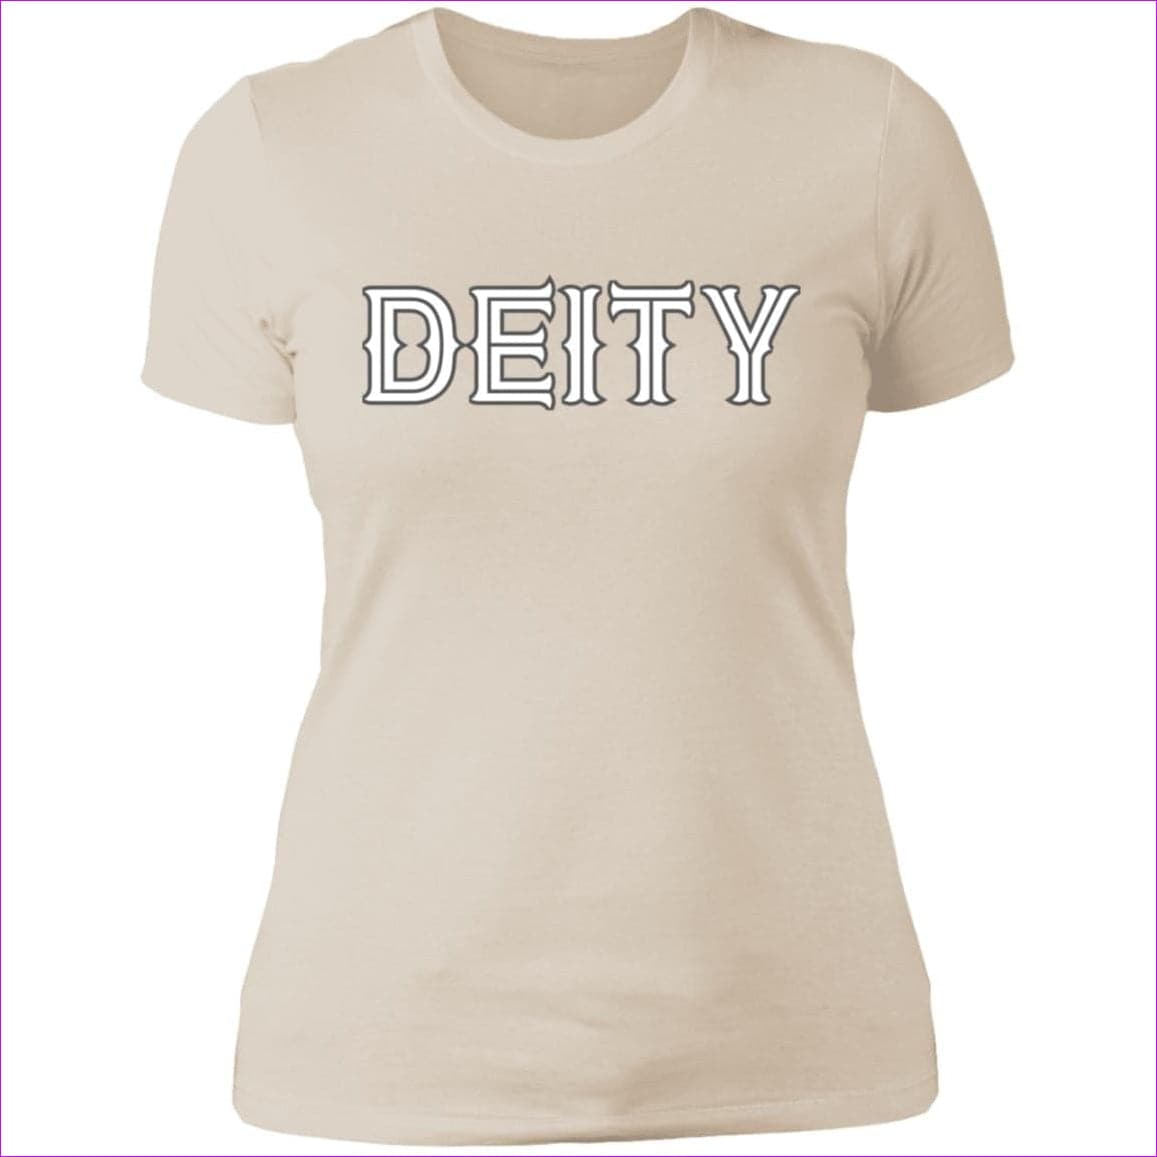 Ivory - Deity Ladies' Boyfriend T-Shirt - Womens t-Shirts at TFC&H Co.